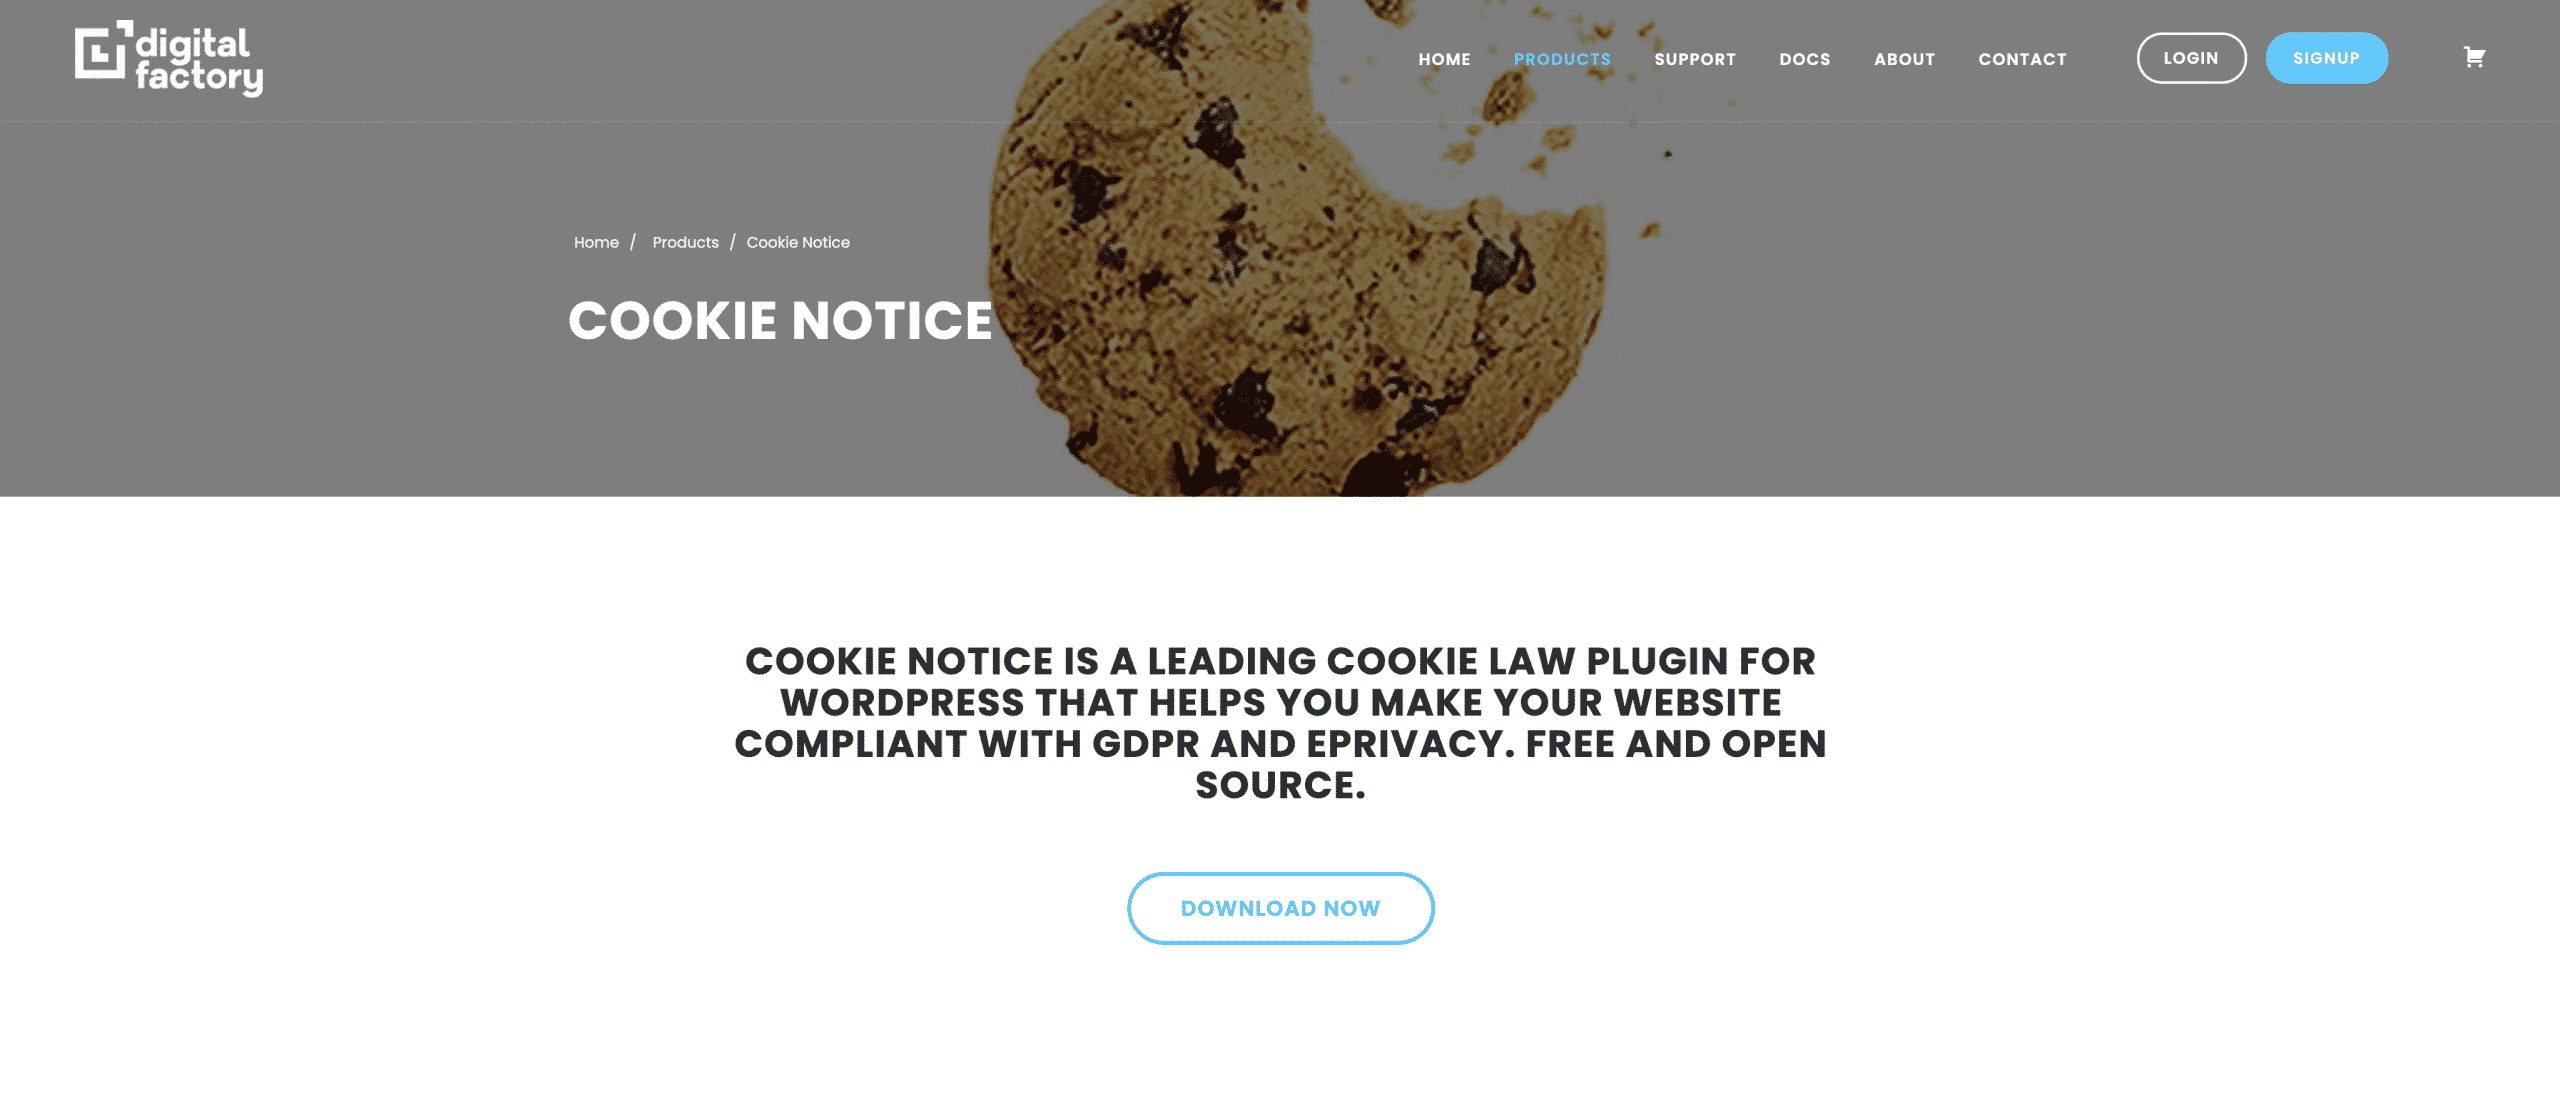 Cookie notice plugin website screenshot conor bradley digital agency